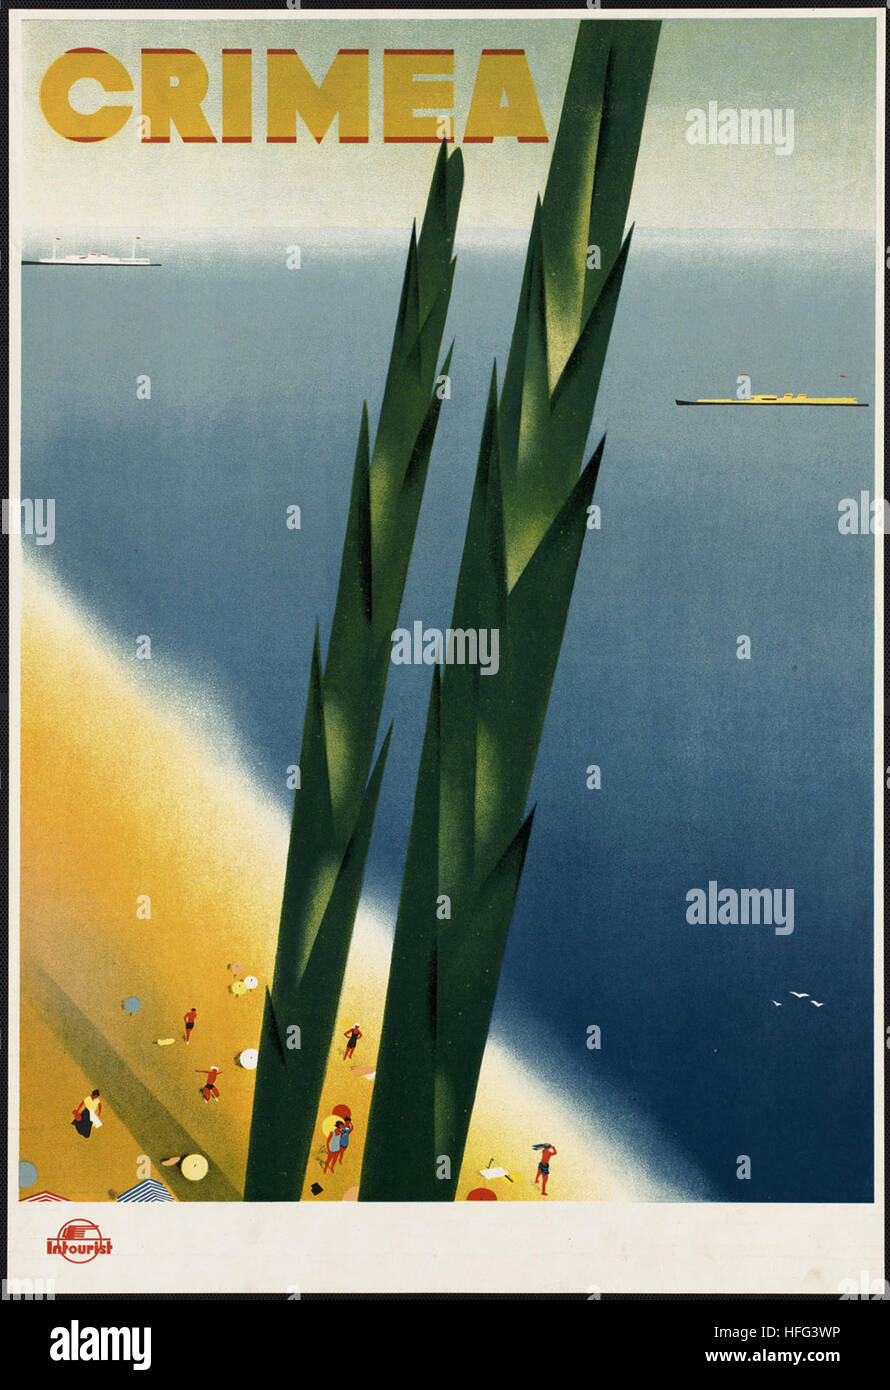 Vintage Travel Poster - Crimea Stock Photo